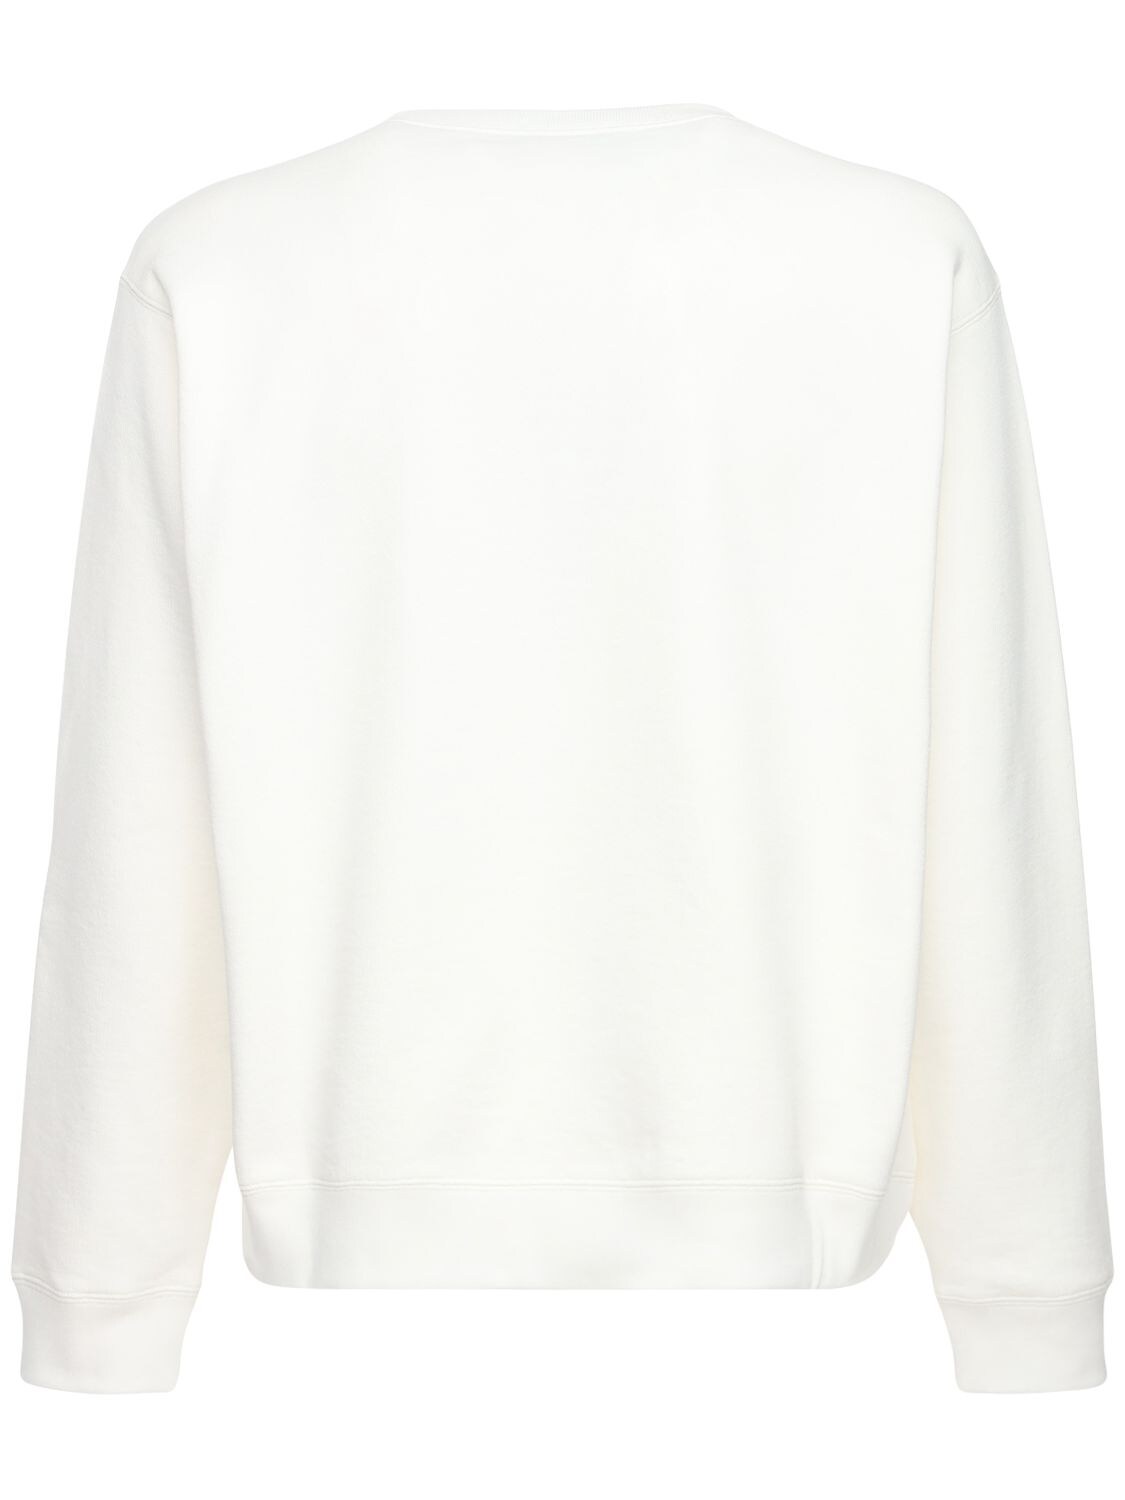 Shop Gucci Original Print Cotton Sweatshirt In White